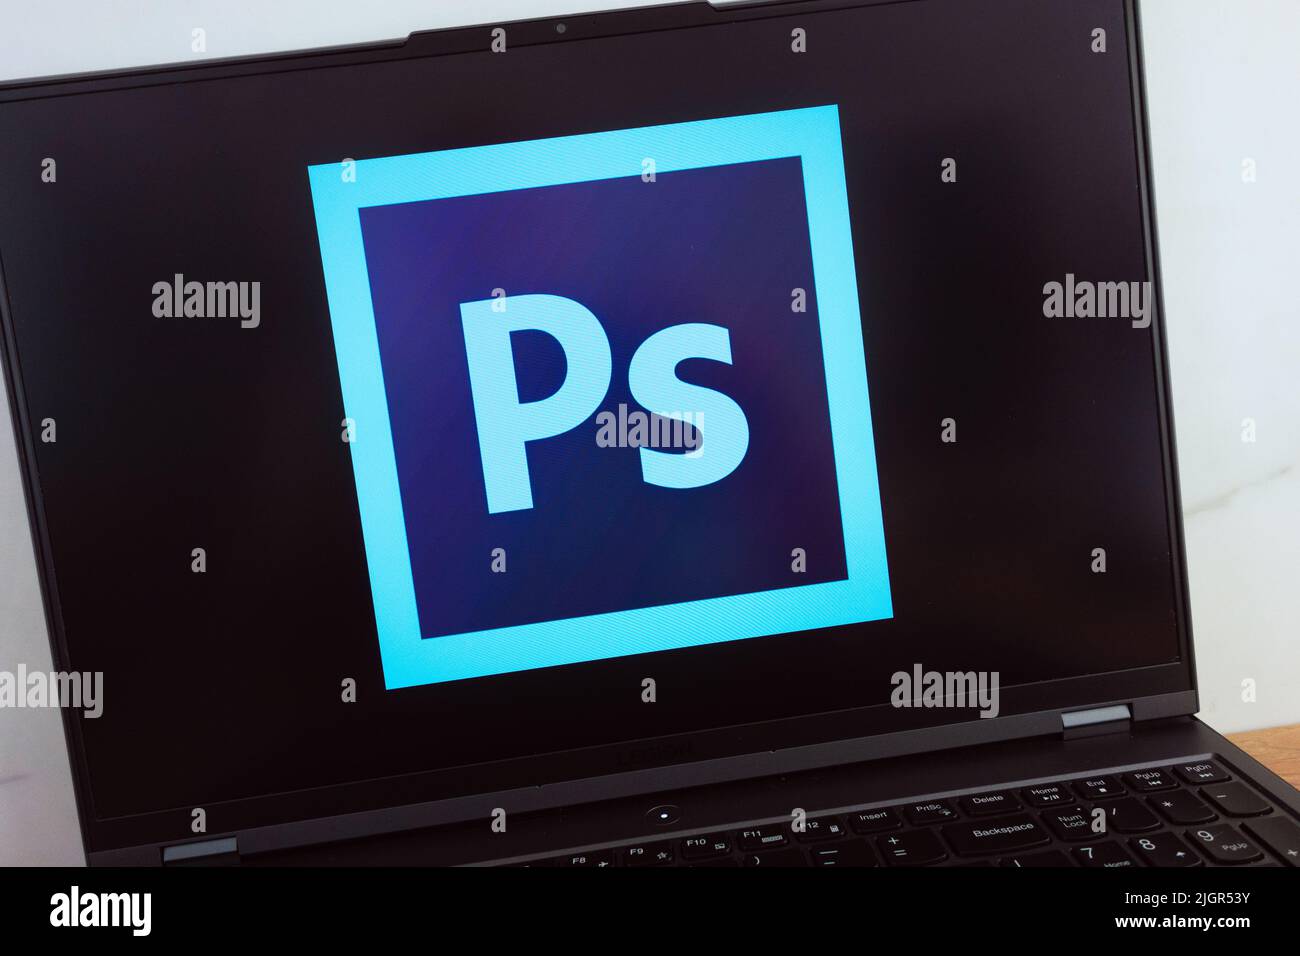 KONSKIE, POLAND - July 11, 2022: Adobe Photoshop graphics editor logo displayed on laptop computer screen Stock Photo